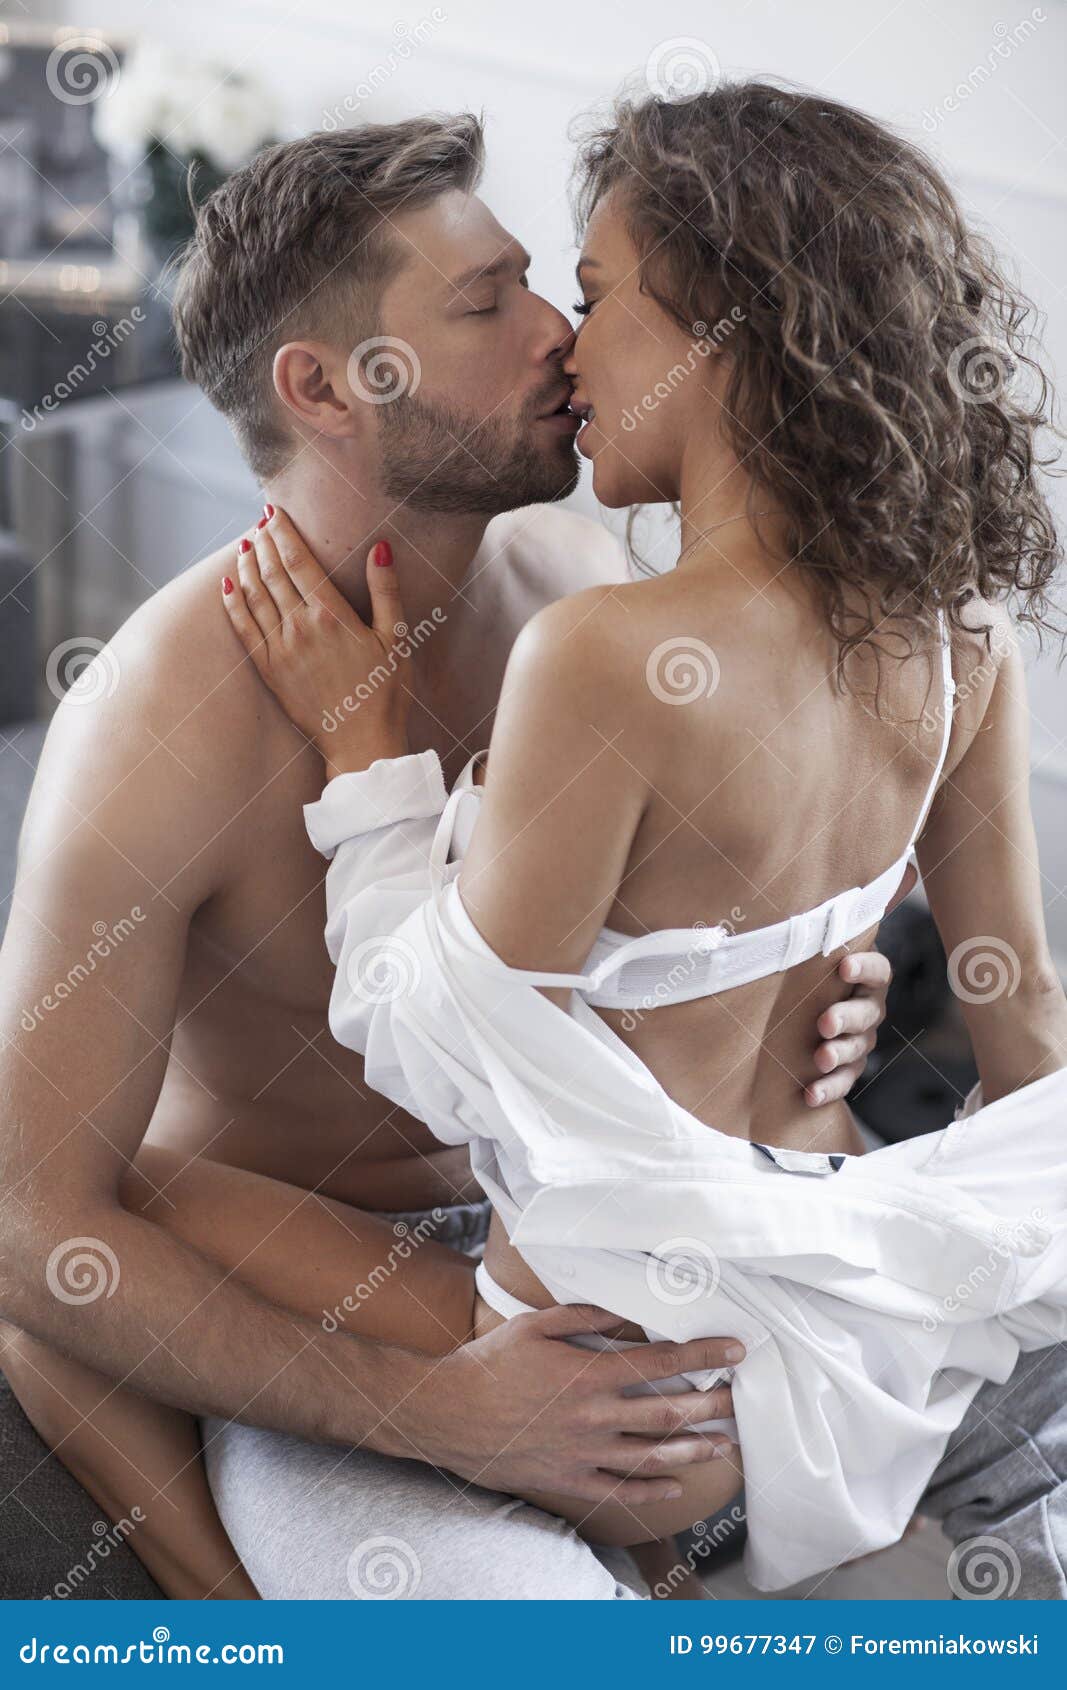 austin jury add photos of couples making love photo